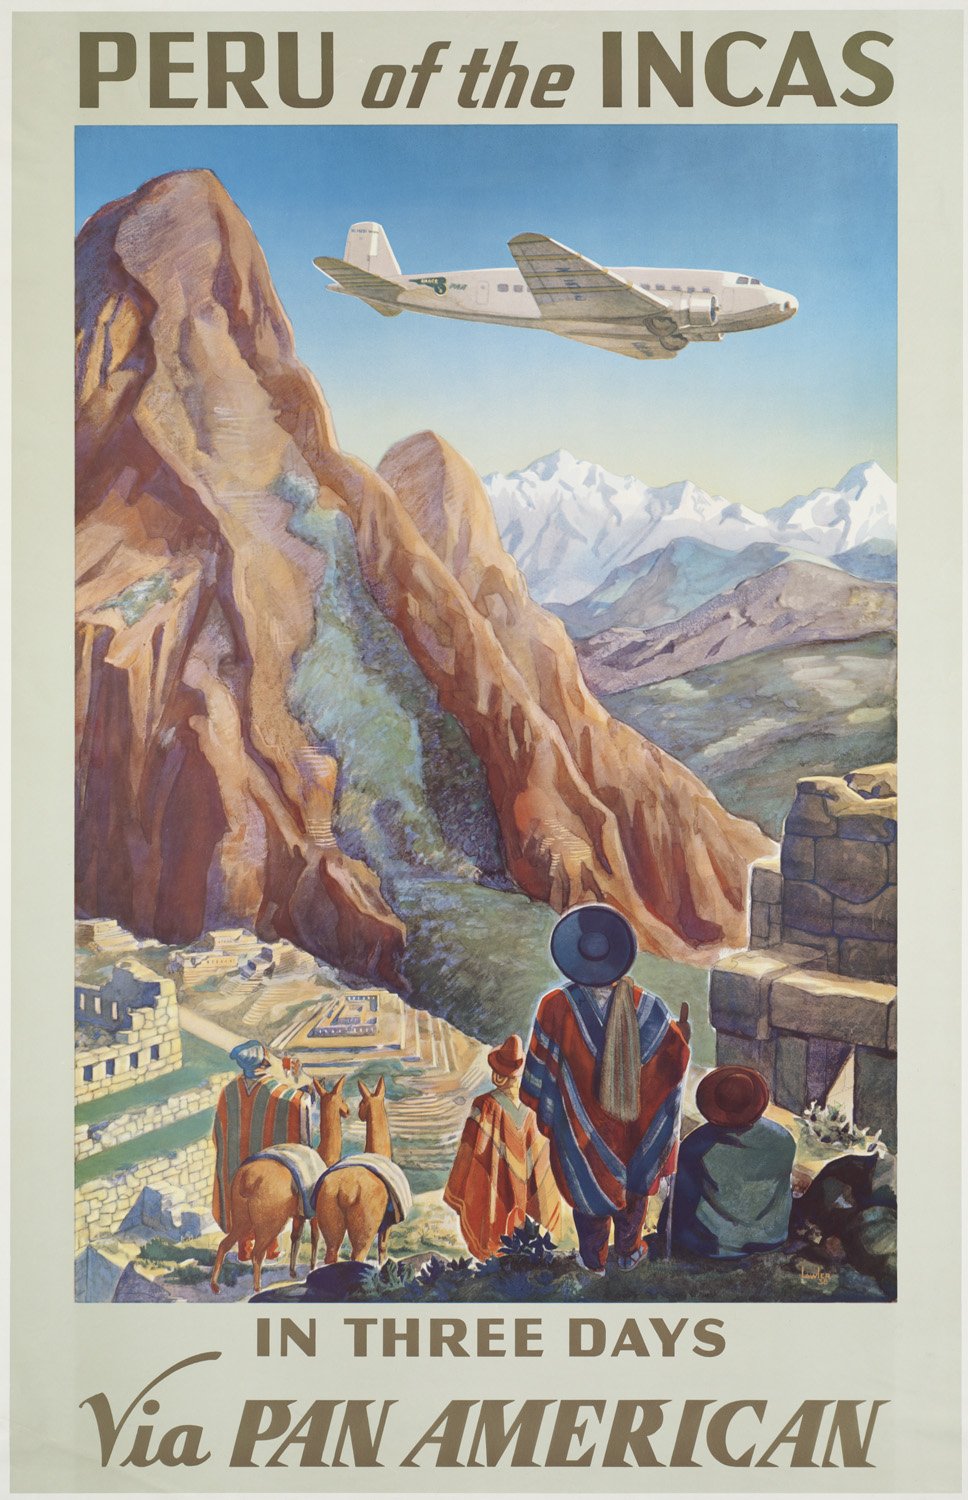 Vintage air travel poster